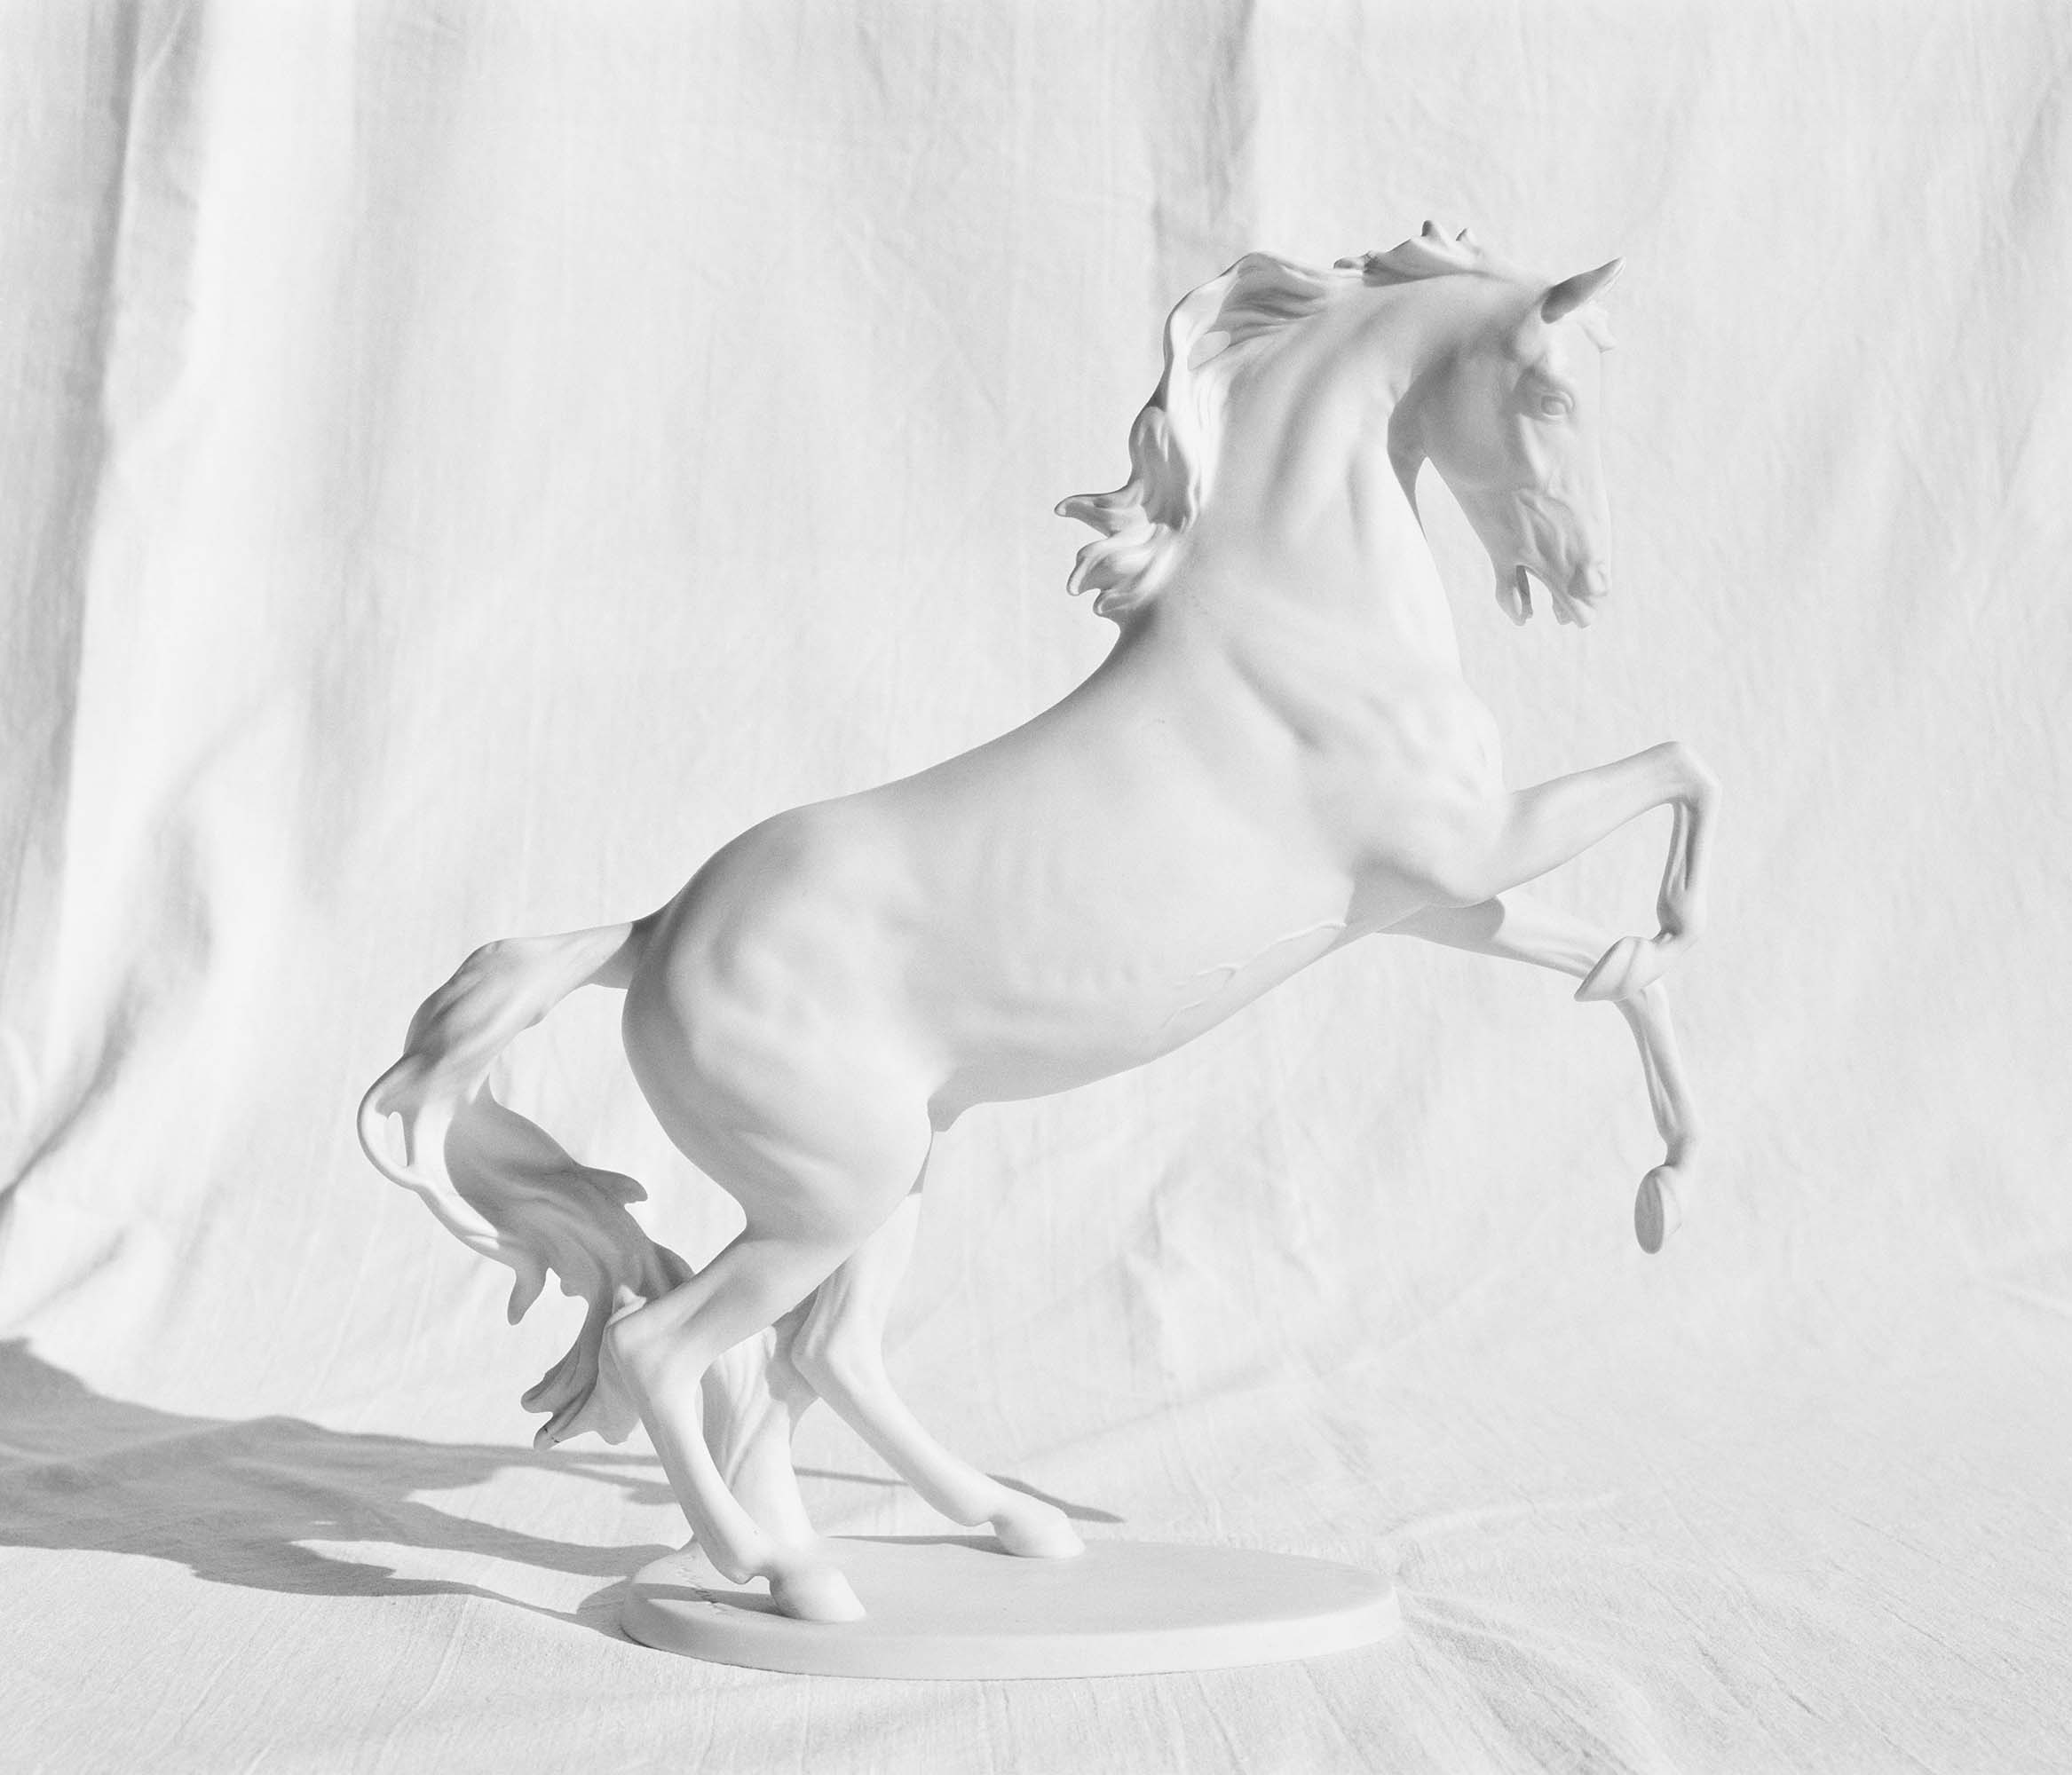 Destiny of a white horse